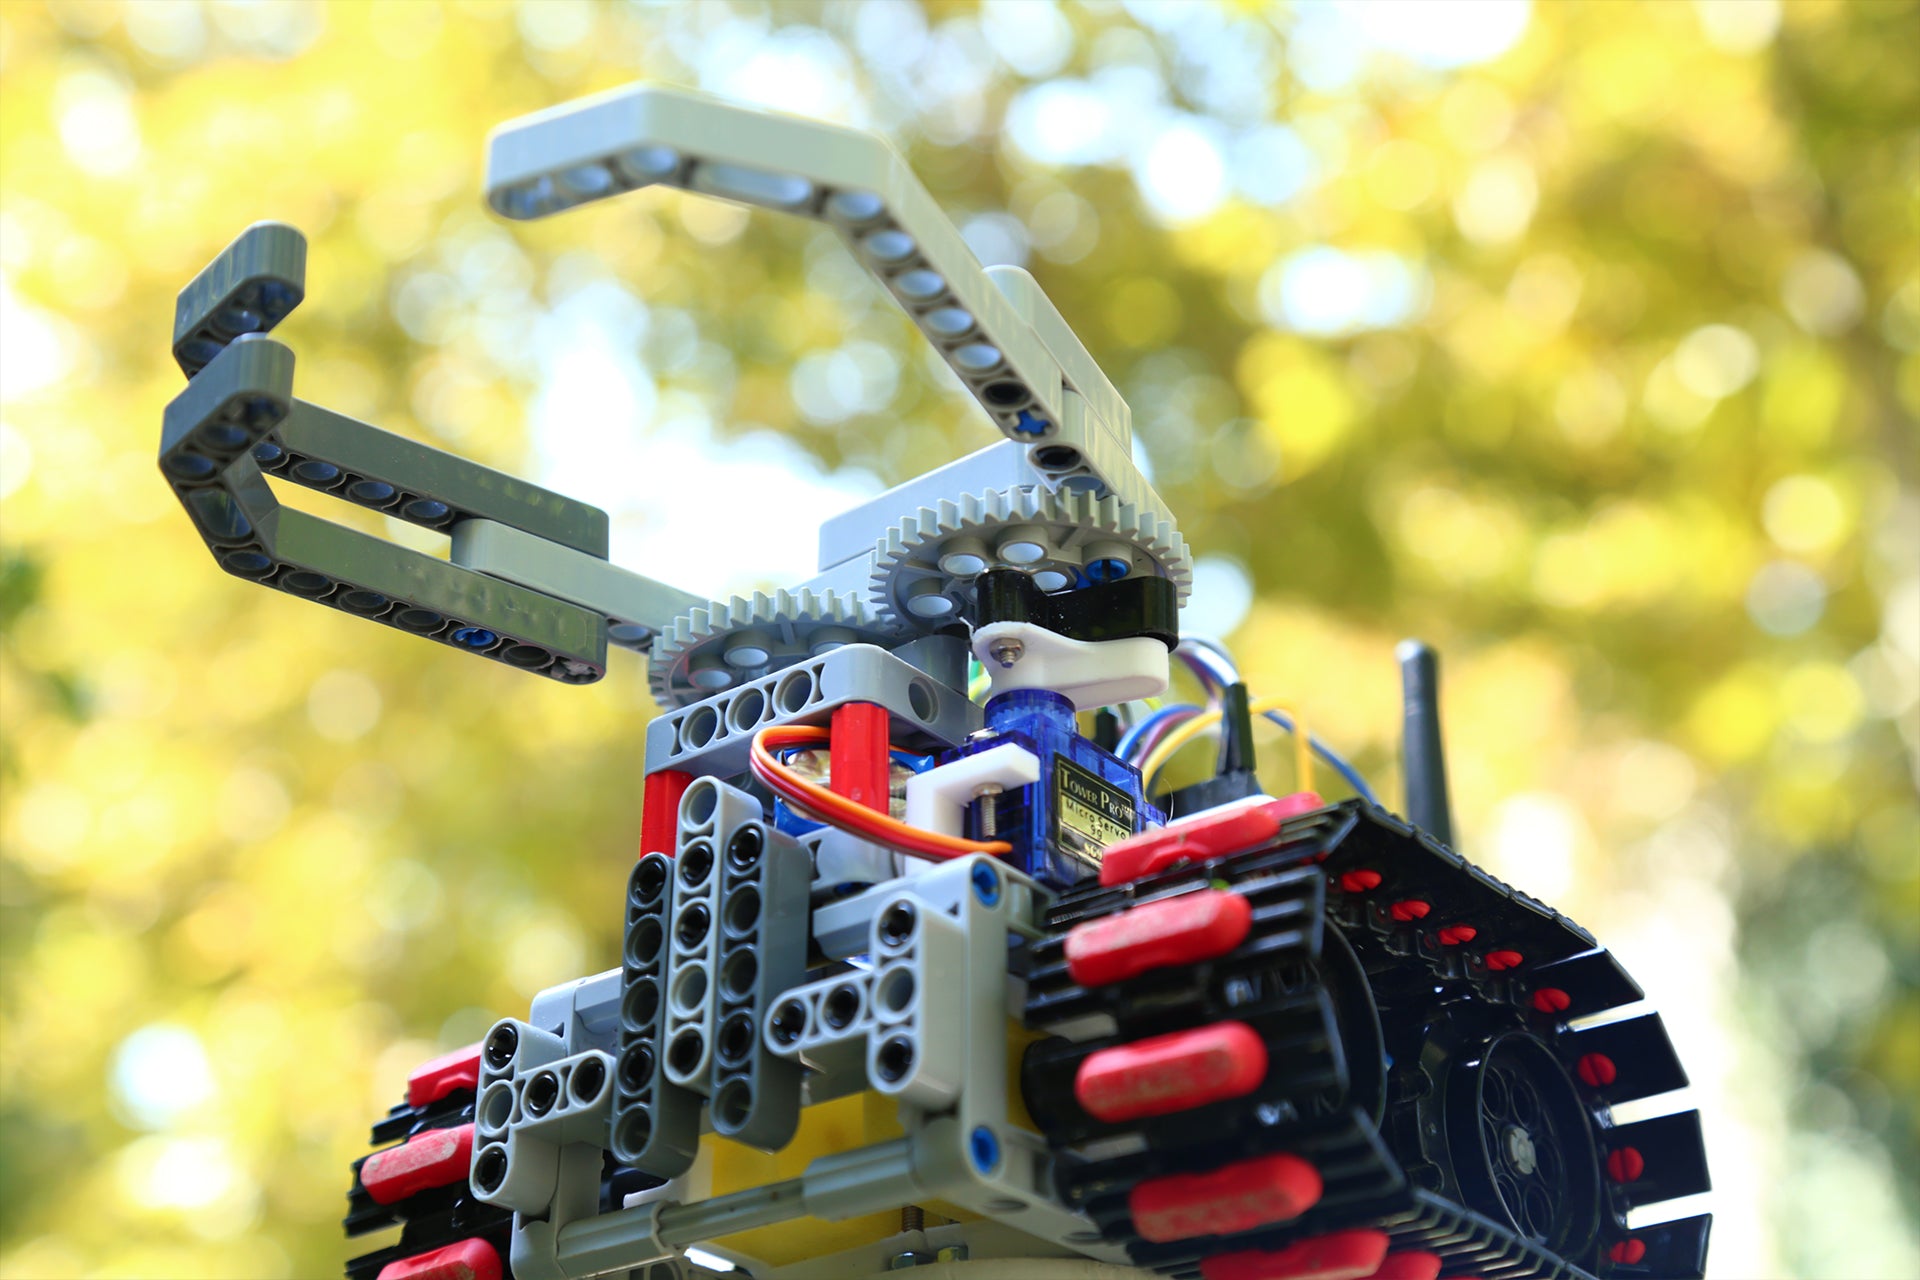 Build LEGO®-compatible Rescue Robot for kids